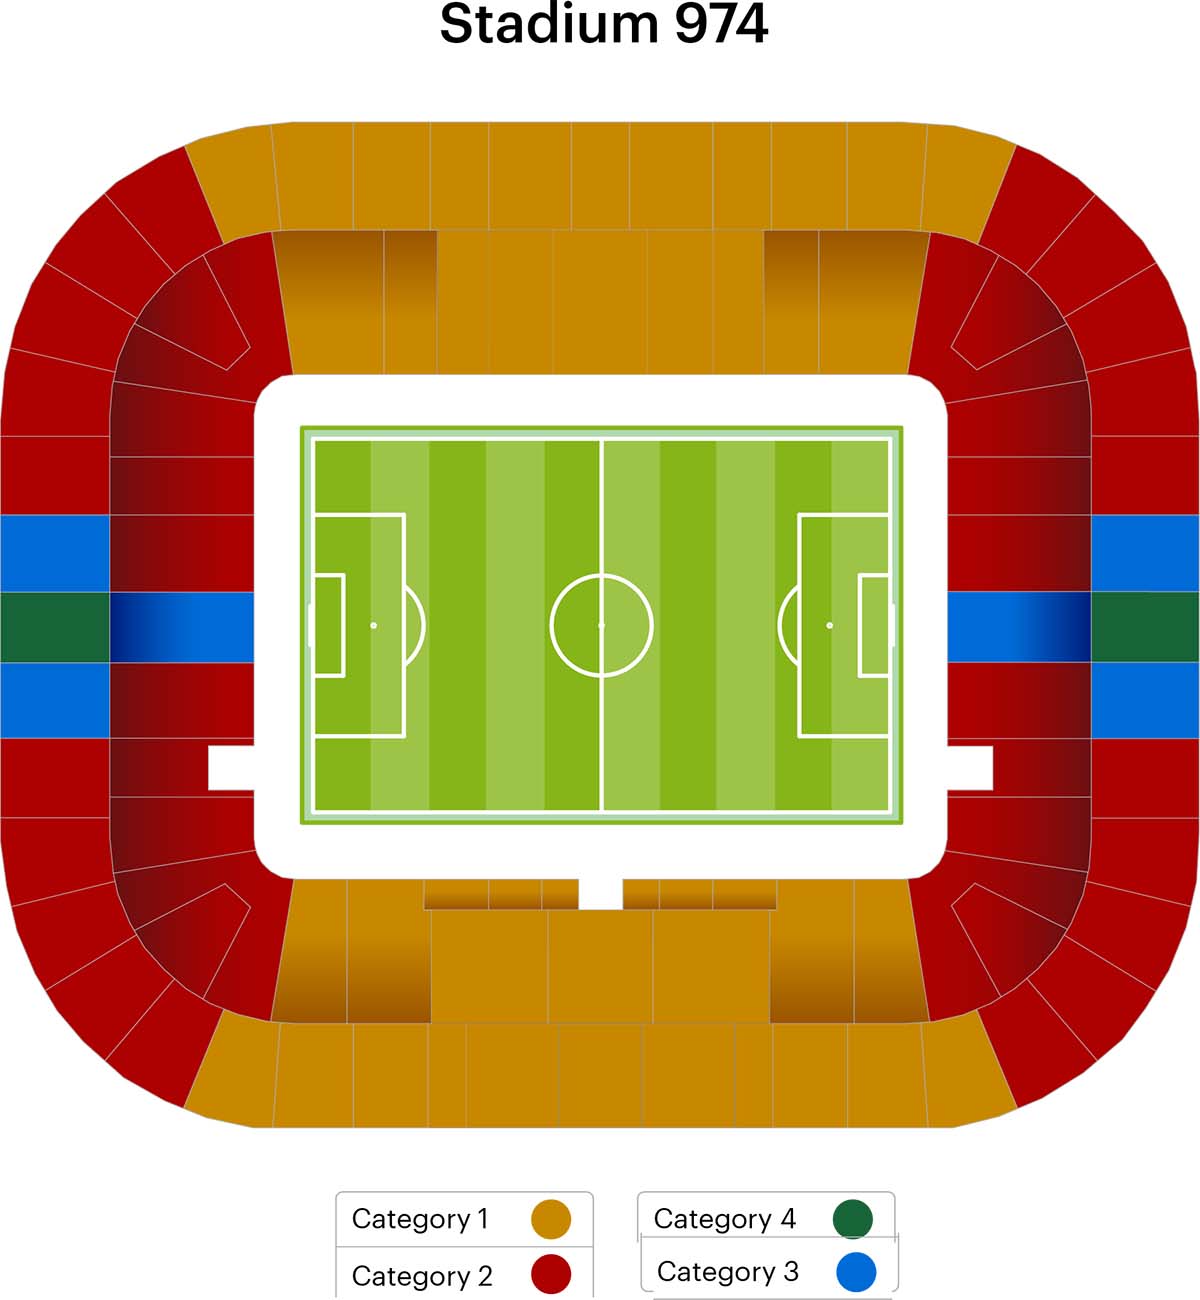 Seating plan and map of Ras Abu Aboud Stadium (Stadium 974) (Ras Abu Aboud) 